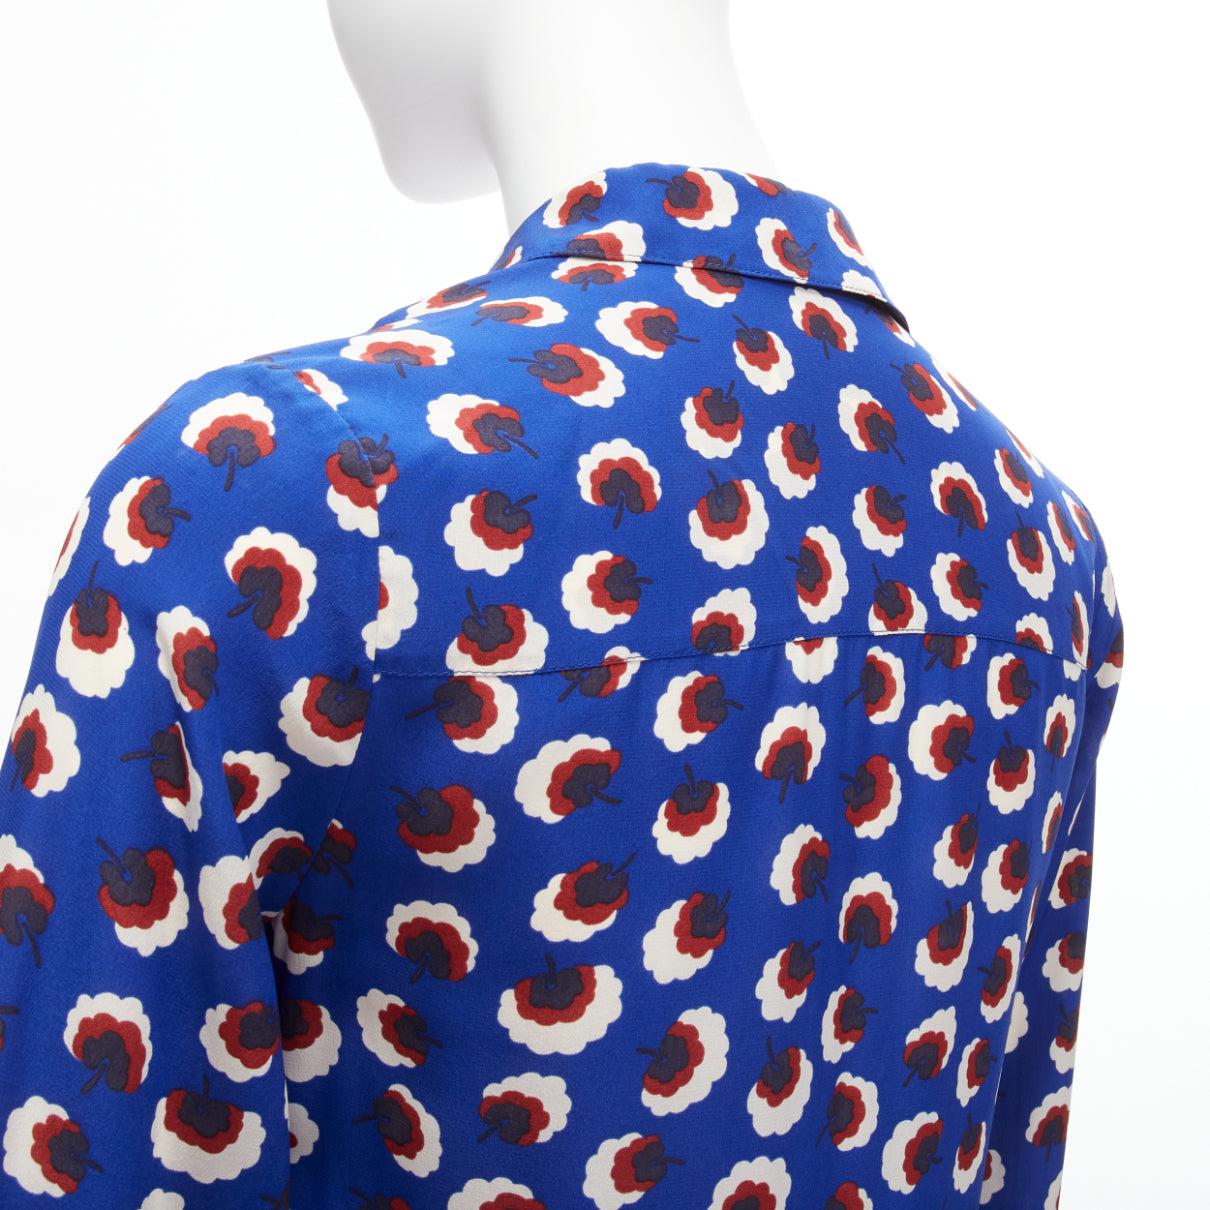 STELLA MCCARTNEY 2014 100% silk blue red white floral print bishop sleeve shirt  For Sale 2